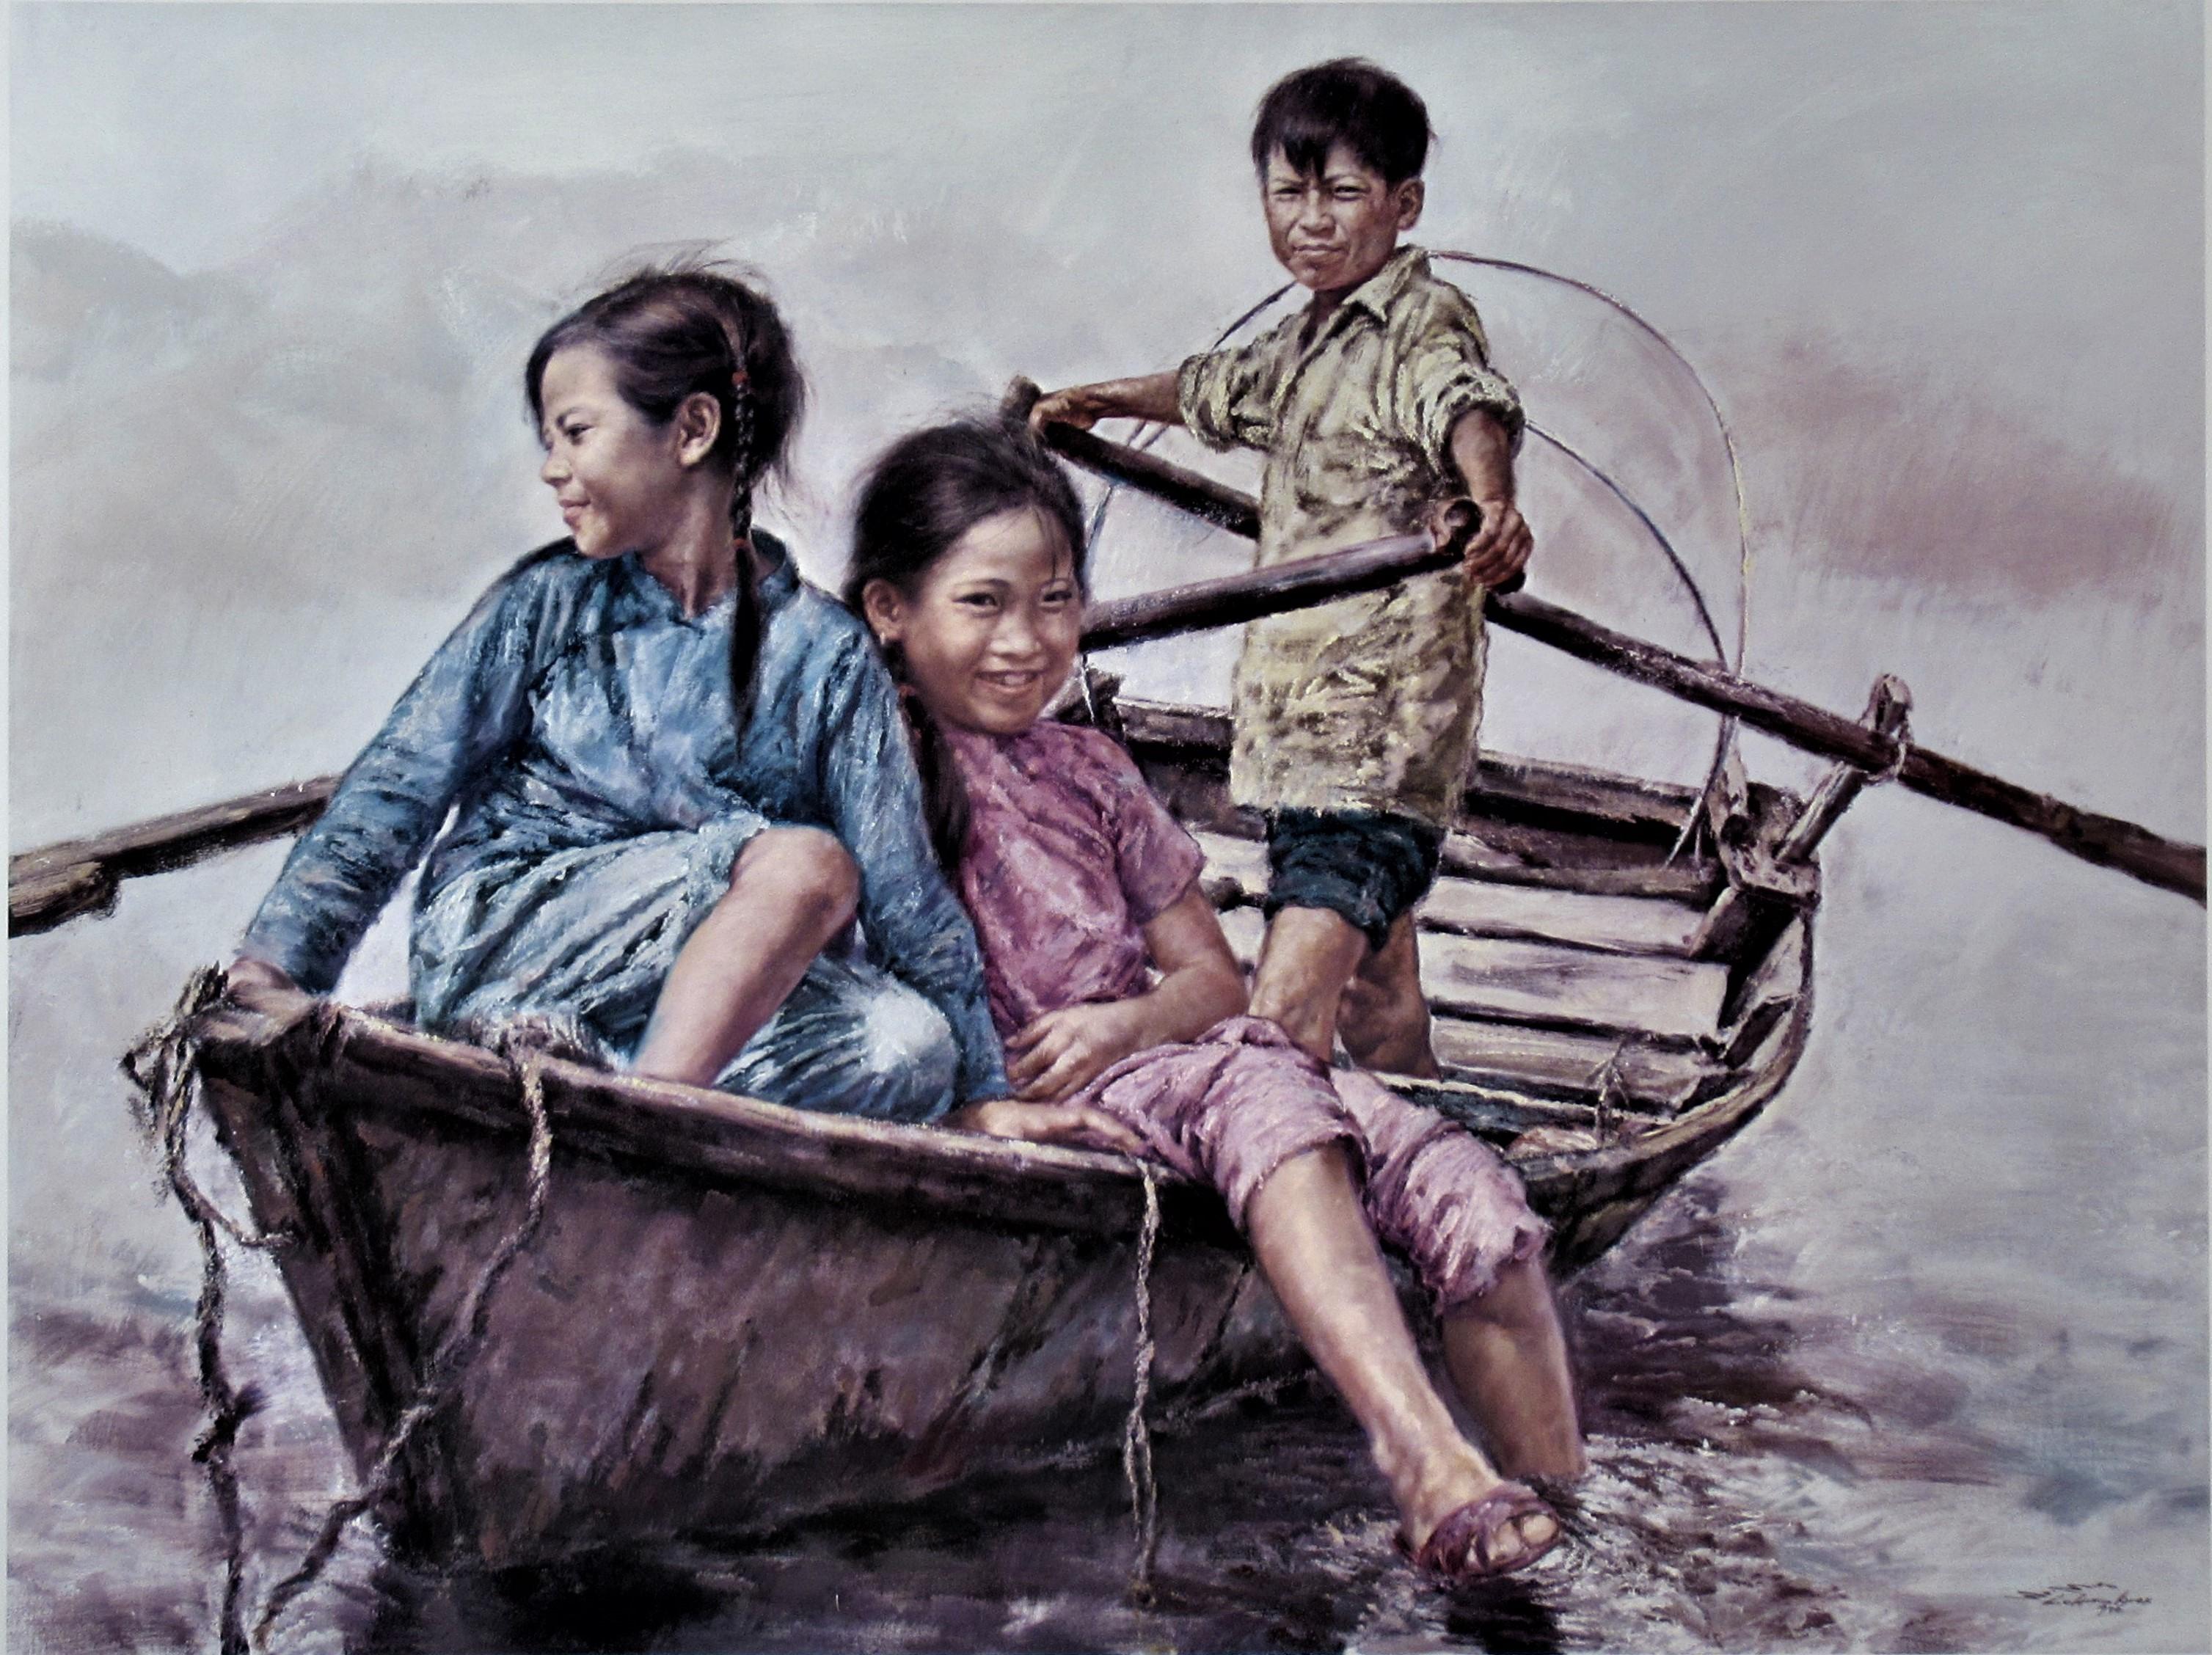 Les enfants dans un bateau - Print de Wai Ming (aka Lo Hing Kwok)